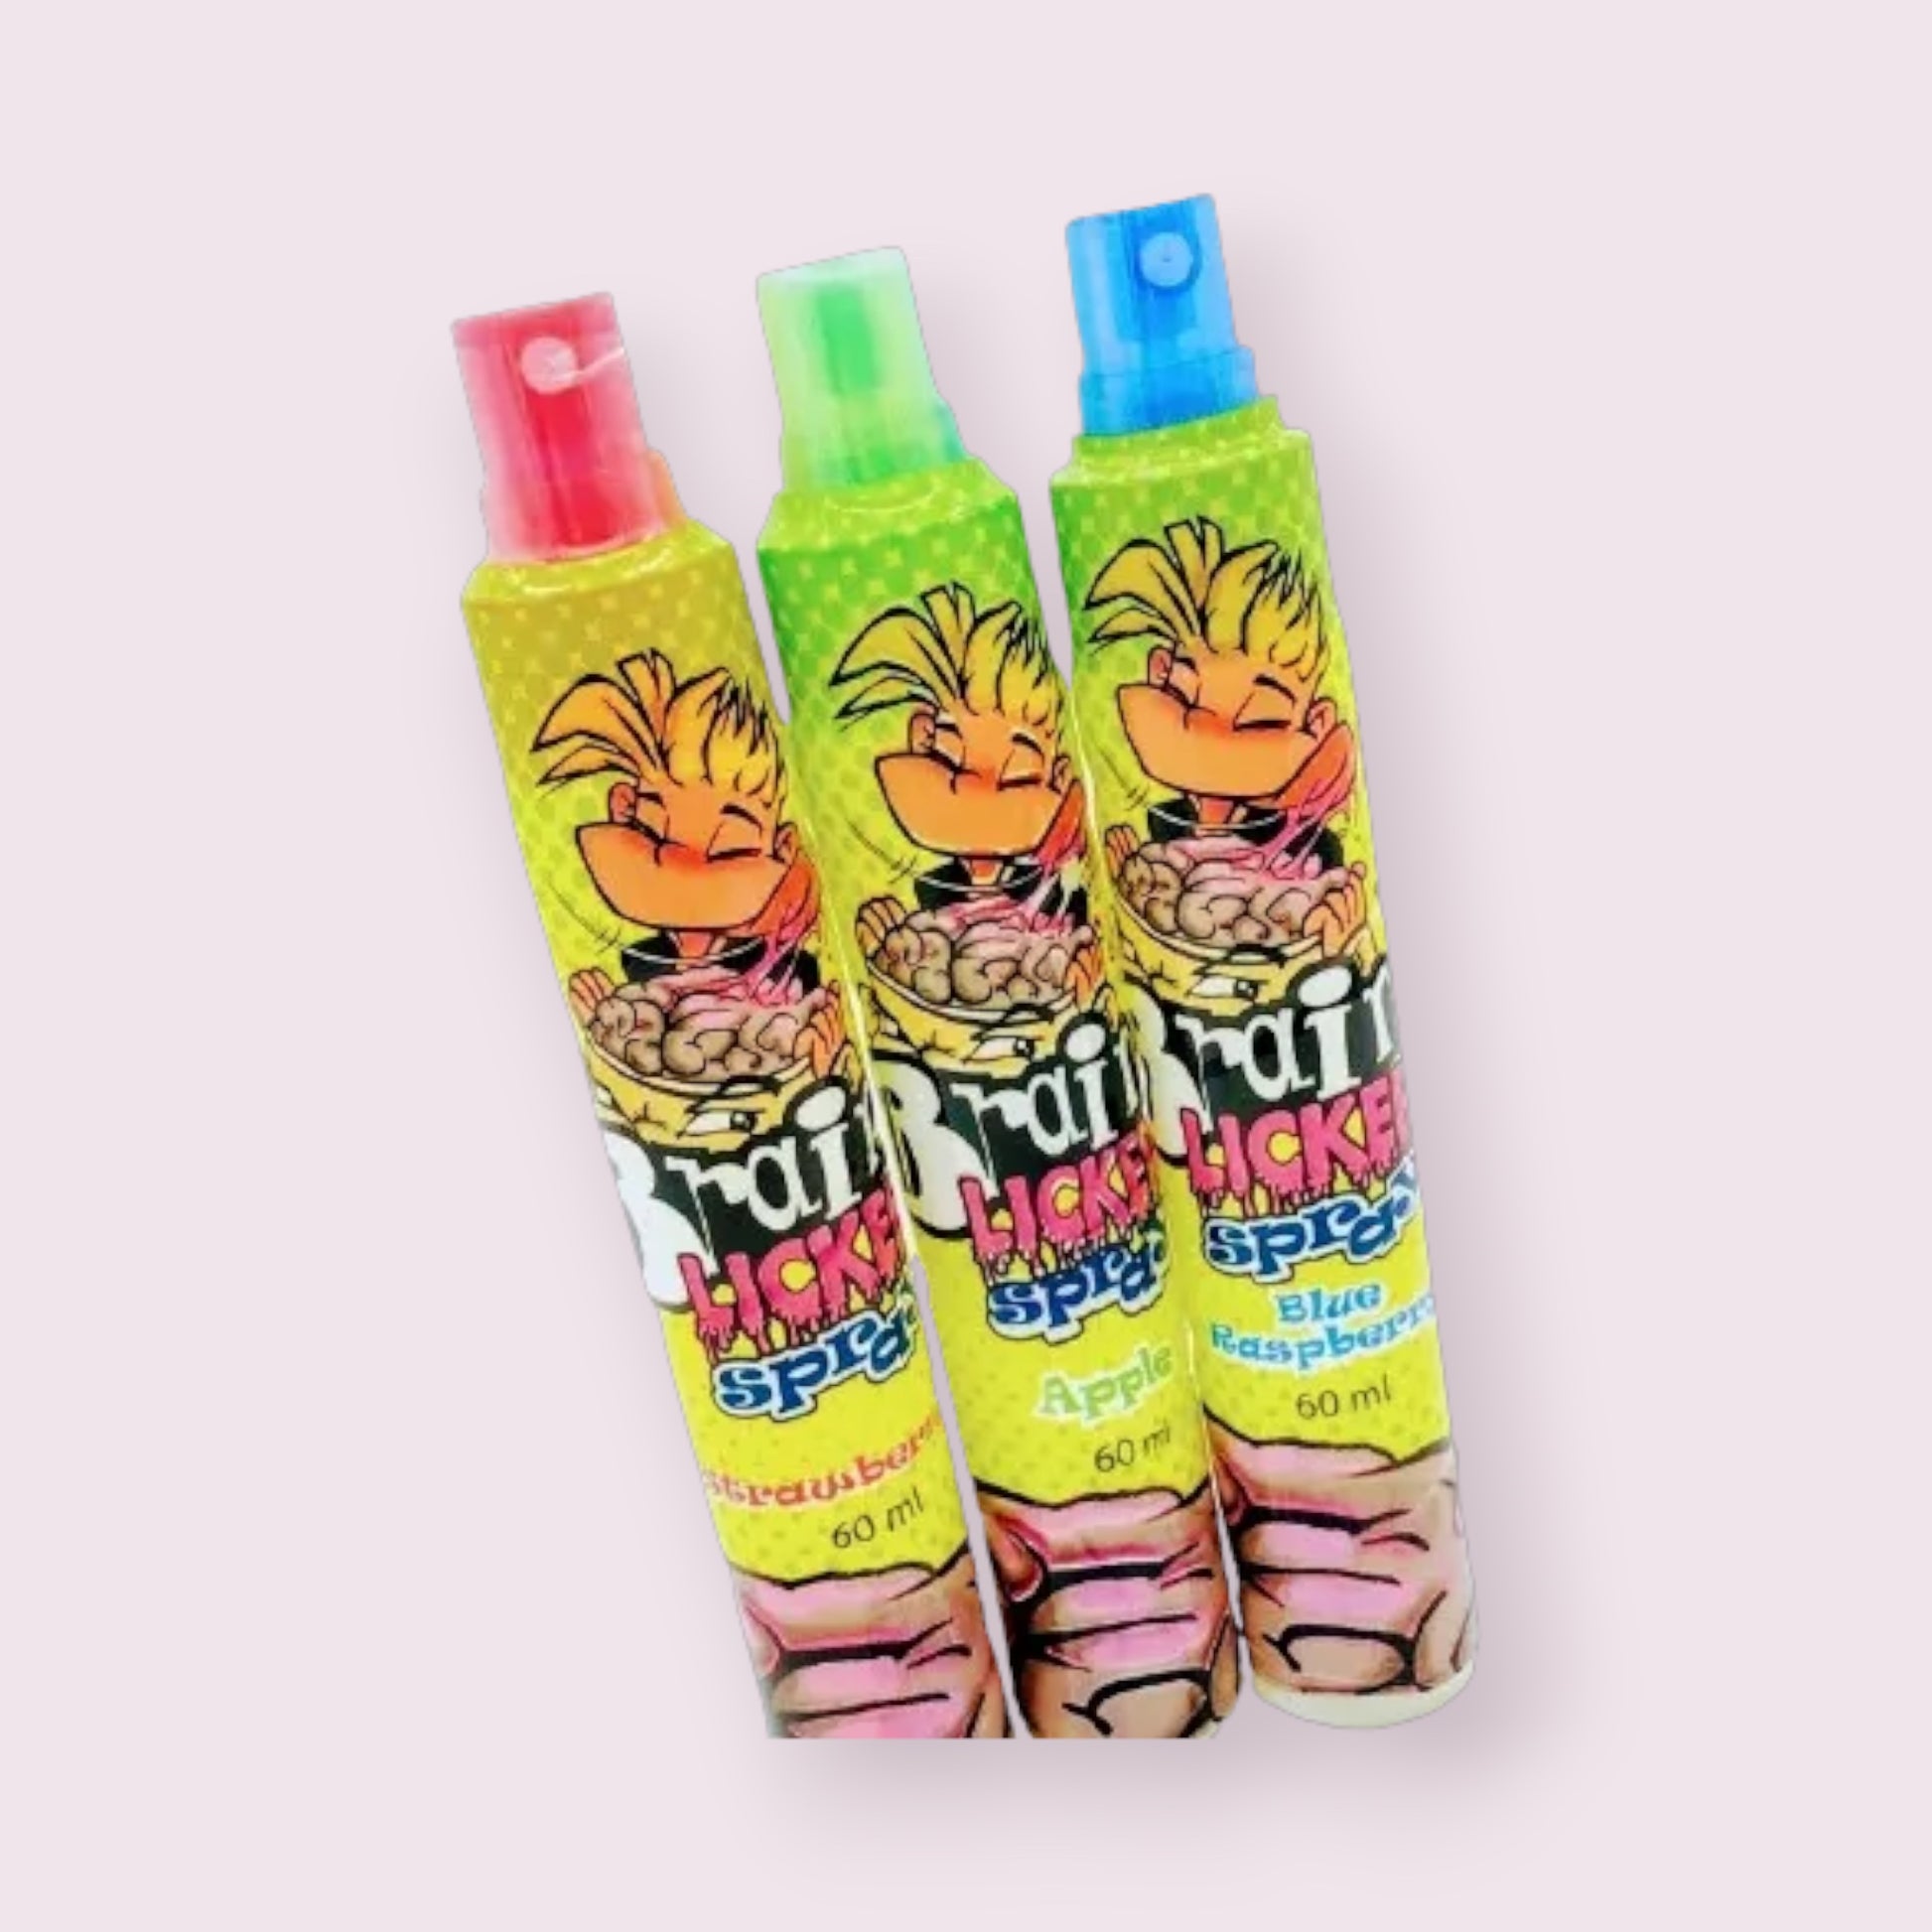 Brain Licker Spray  Pixie Candy Shoppe   